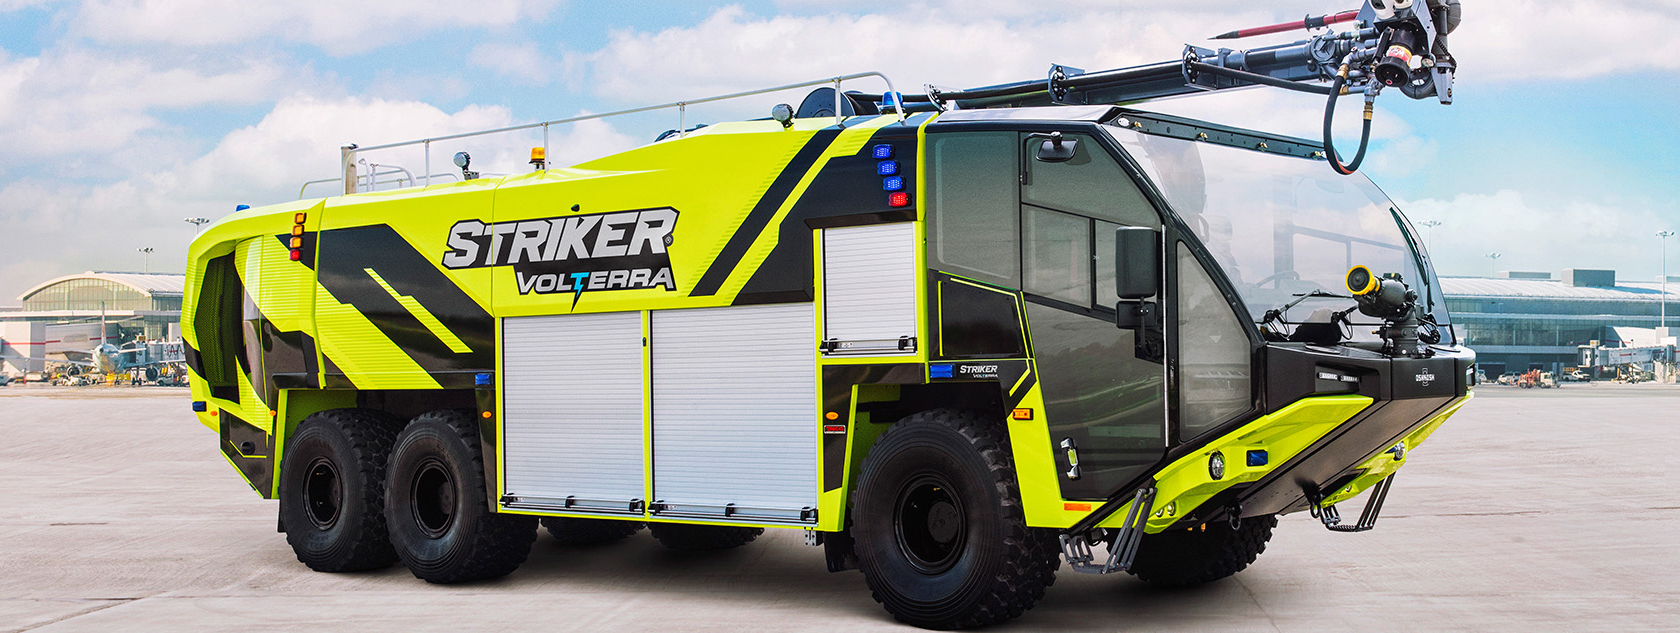 Oshkosh Airport Products Striker Volterra Hybrid Electric ARFF Vehicle